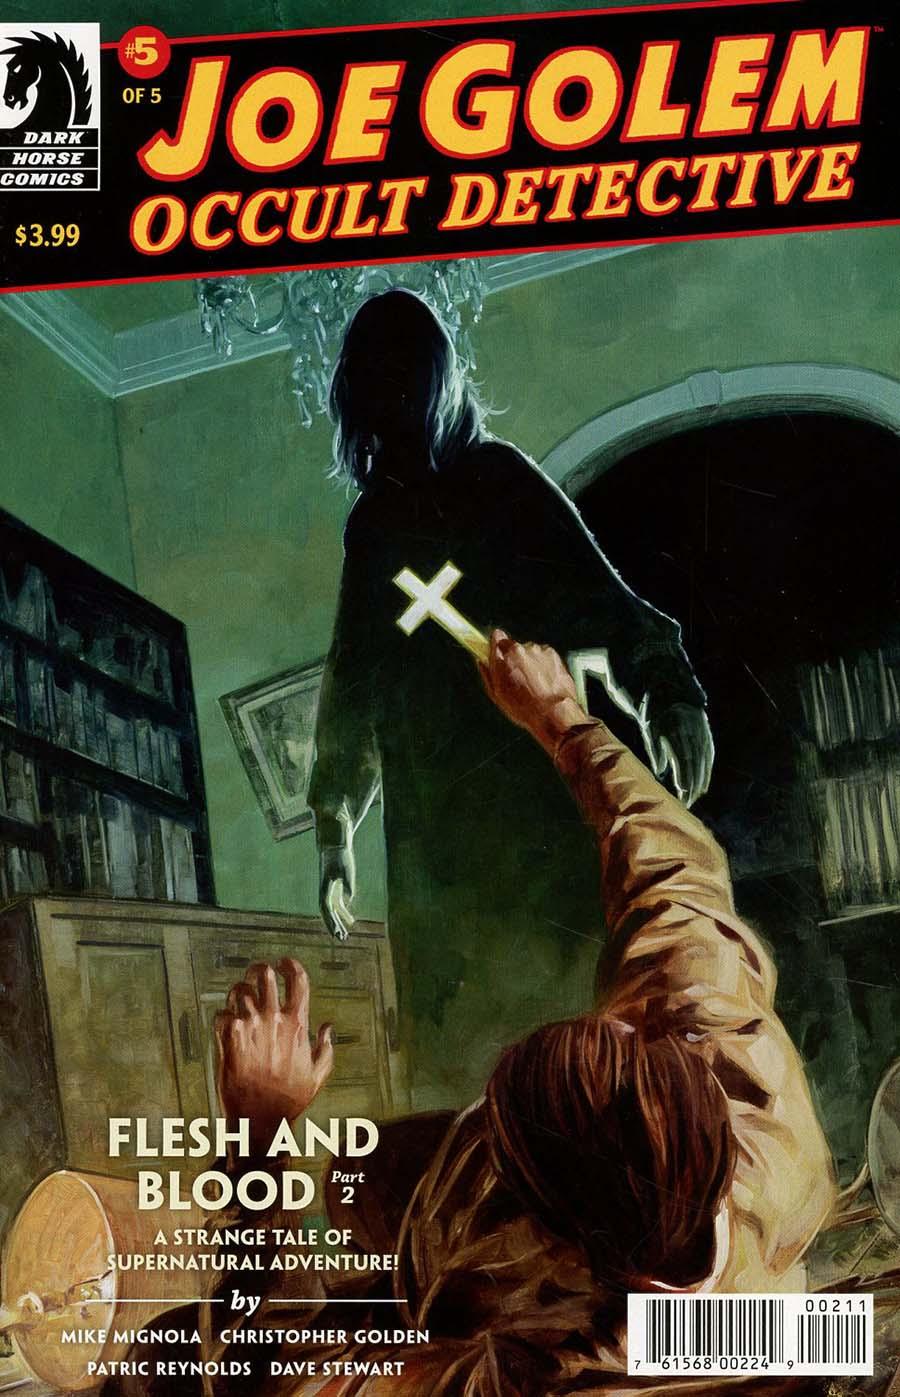 Joe Golem Occult Detective Flesh And Blood Vol. 1 #2